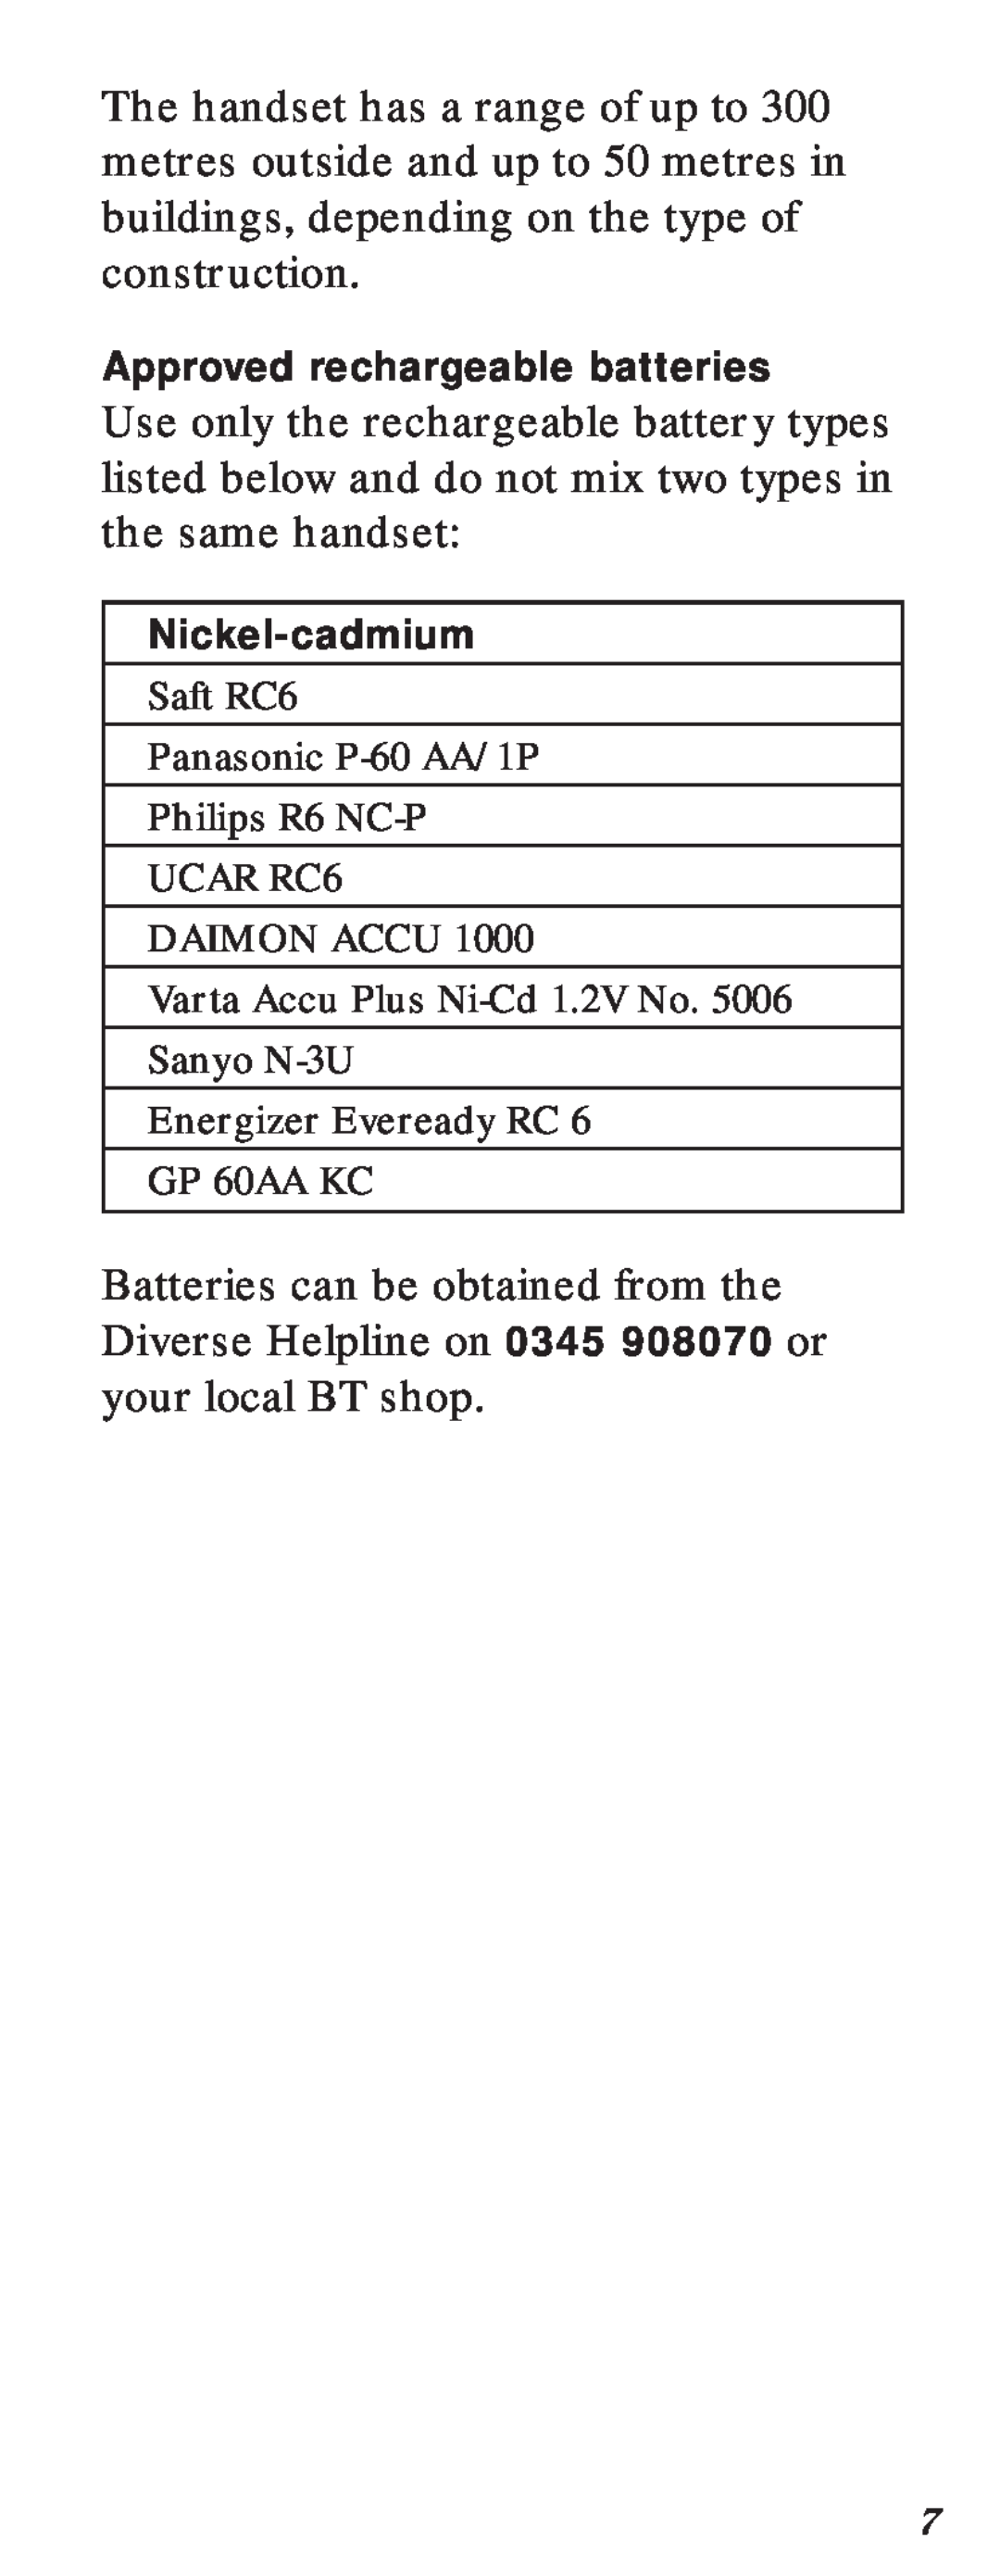 BT 2000 Approved rechargeable batteries, Nickel-cadmium, Varta Accu Plus Ni-Cd 1.2V No Sanyo N-3U Energizer Eveready RC 